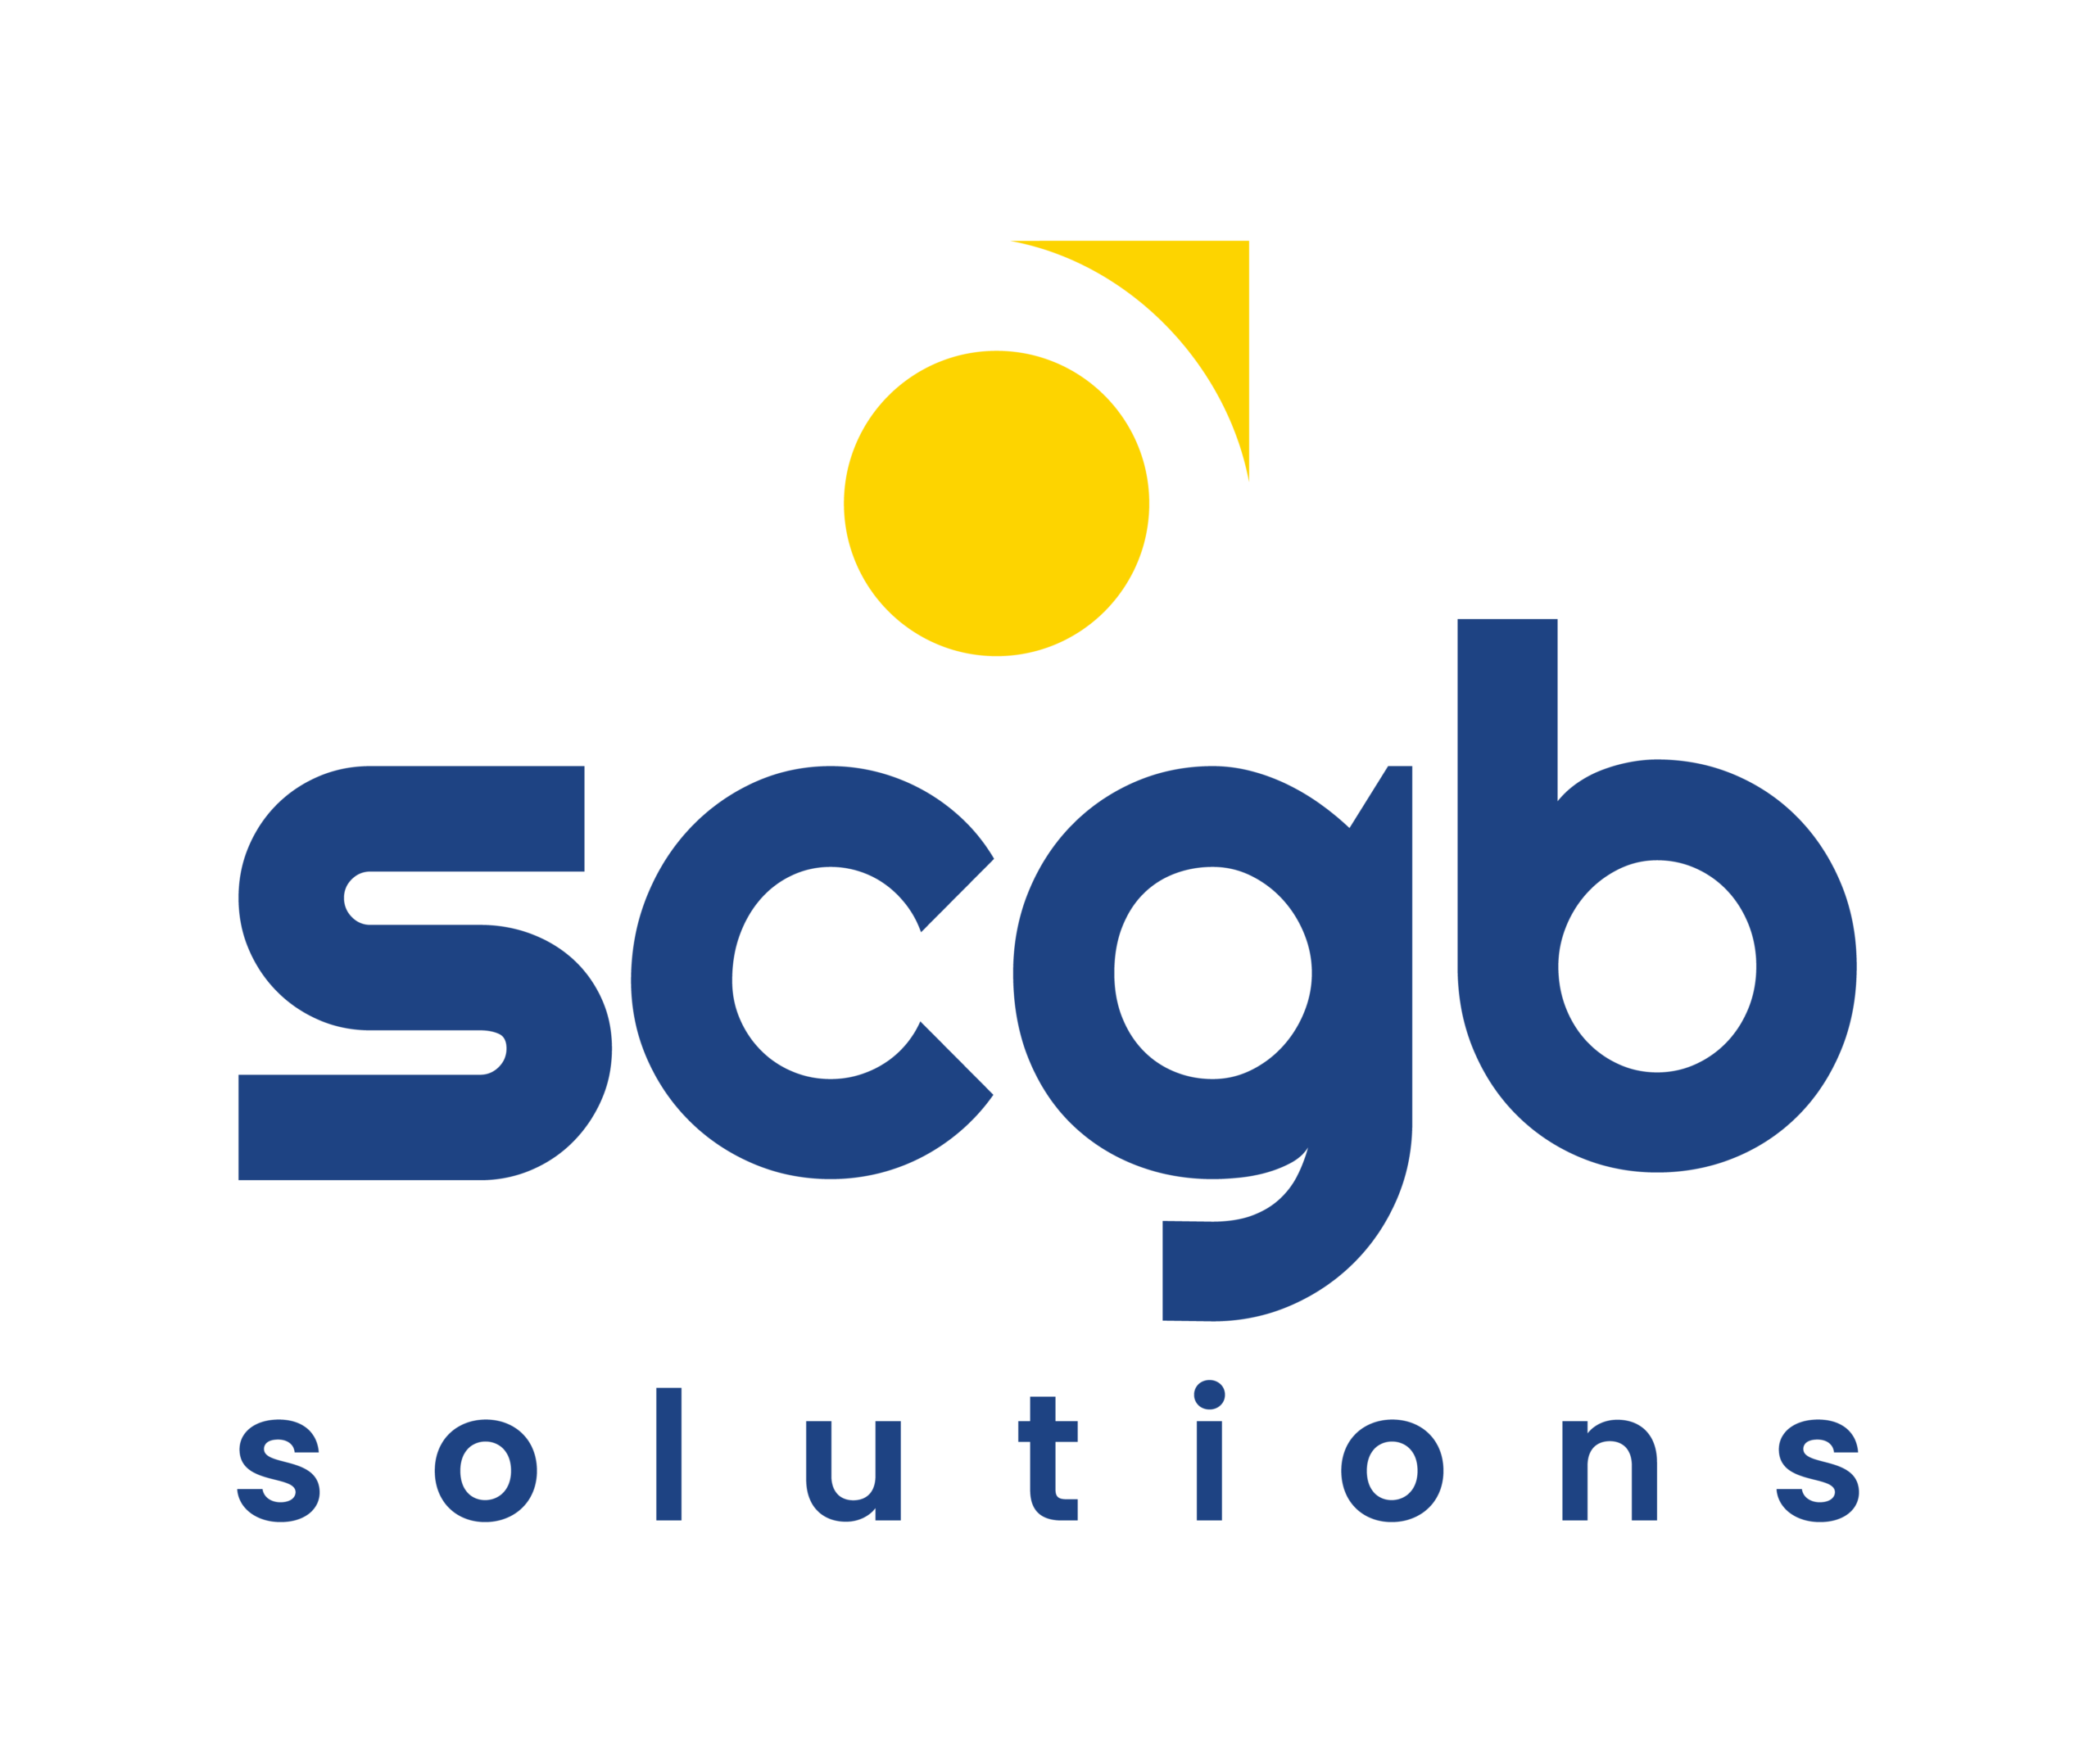 Scgb Solutions